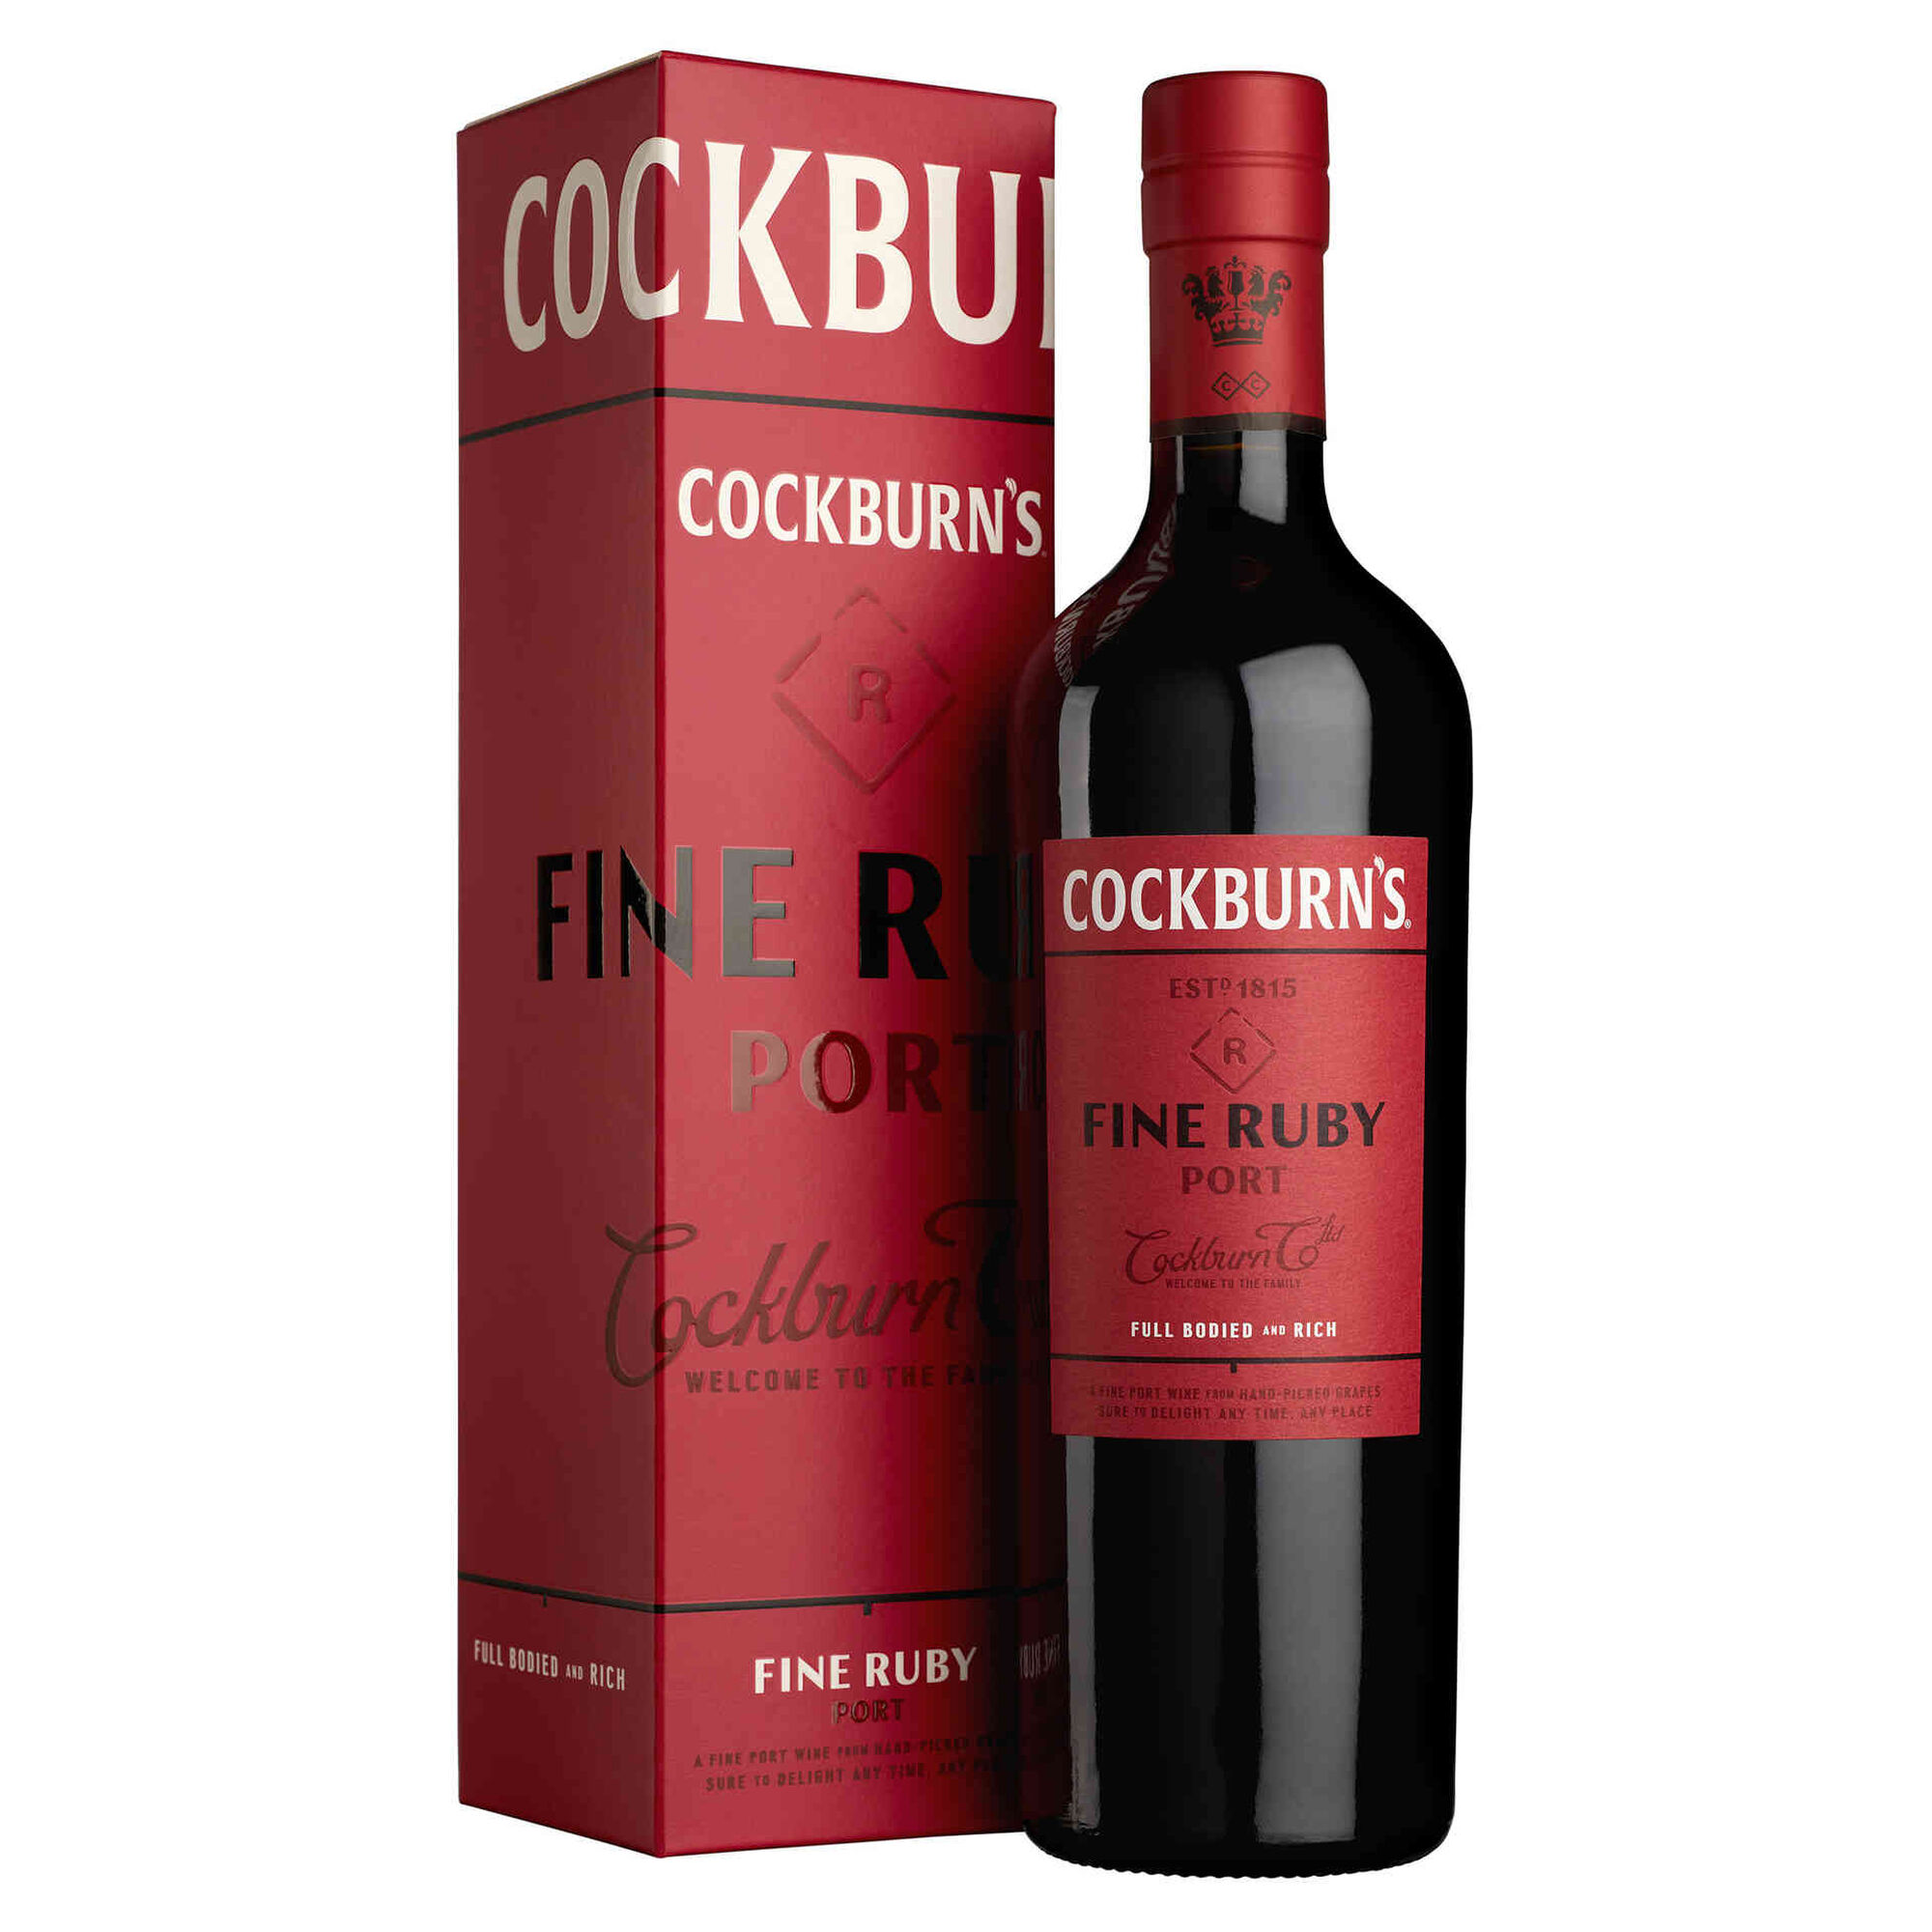 Cockburn's Vinho do Porto Fine Ruby